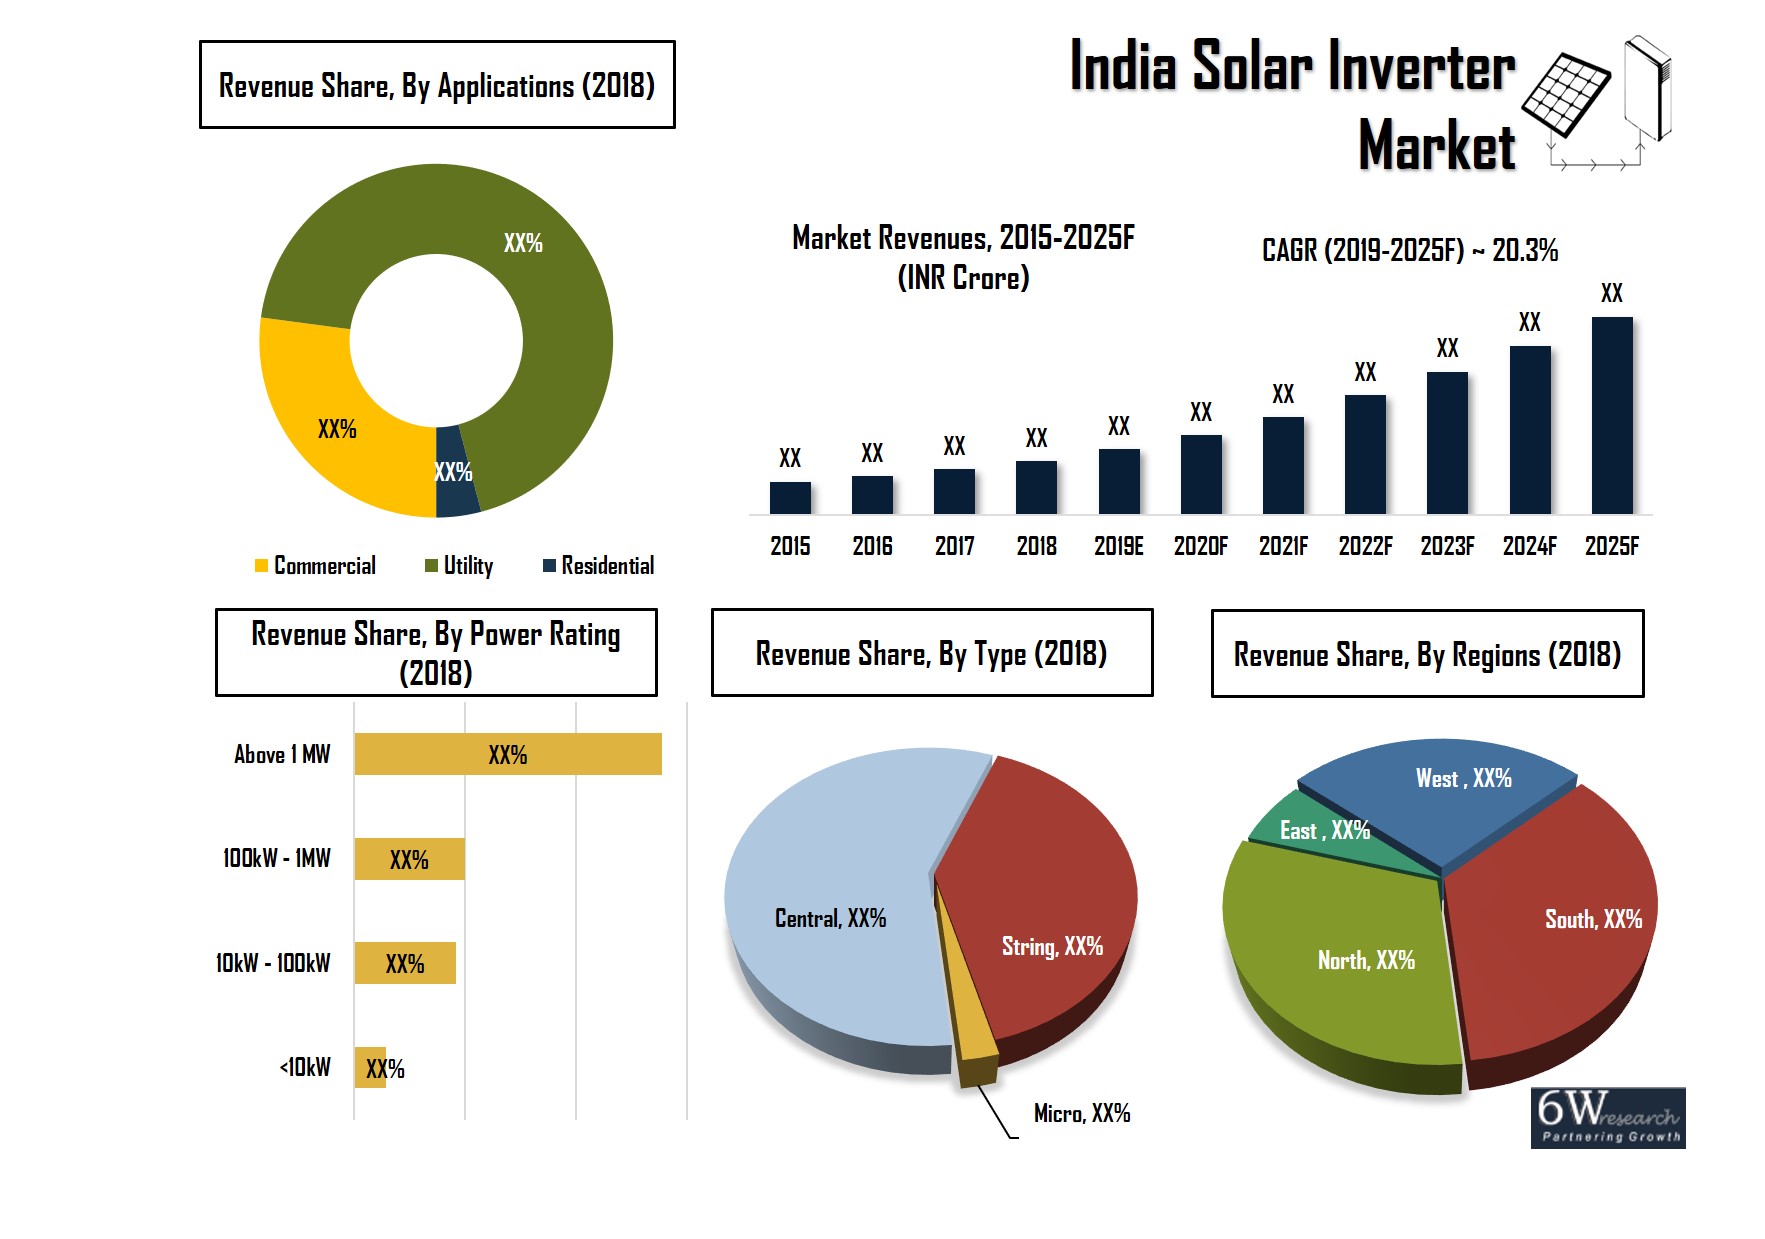 India Solar Inverter Market (2019-2025)